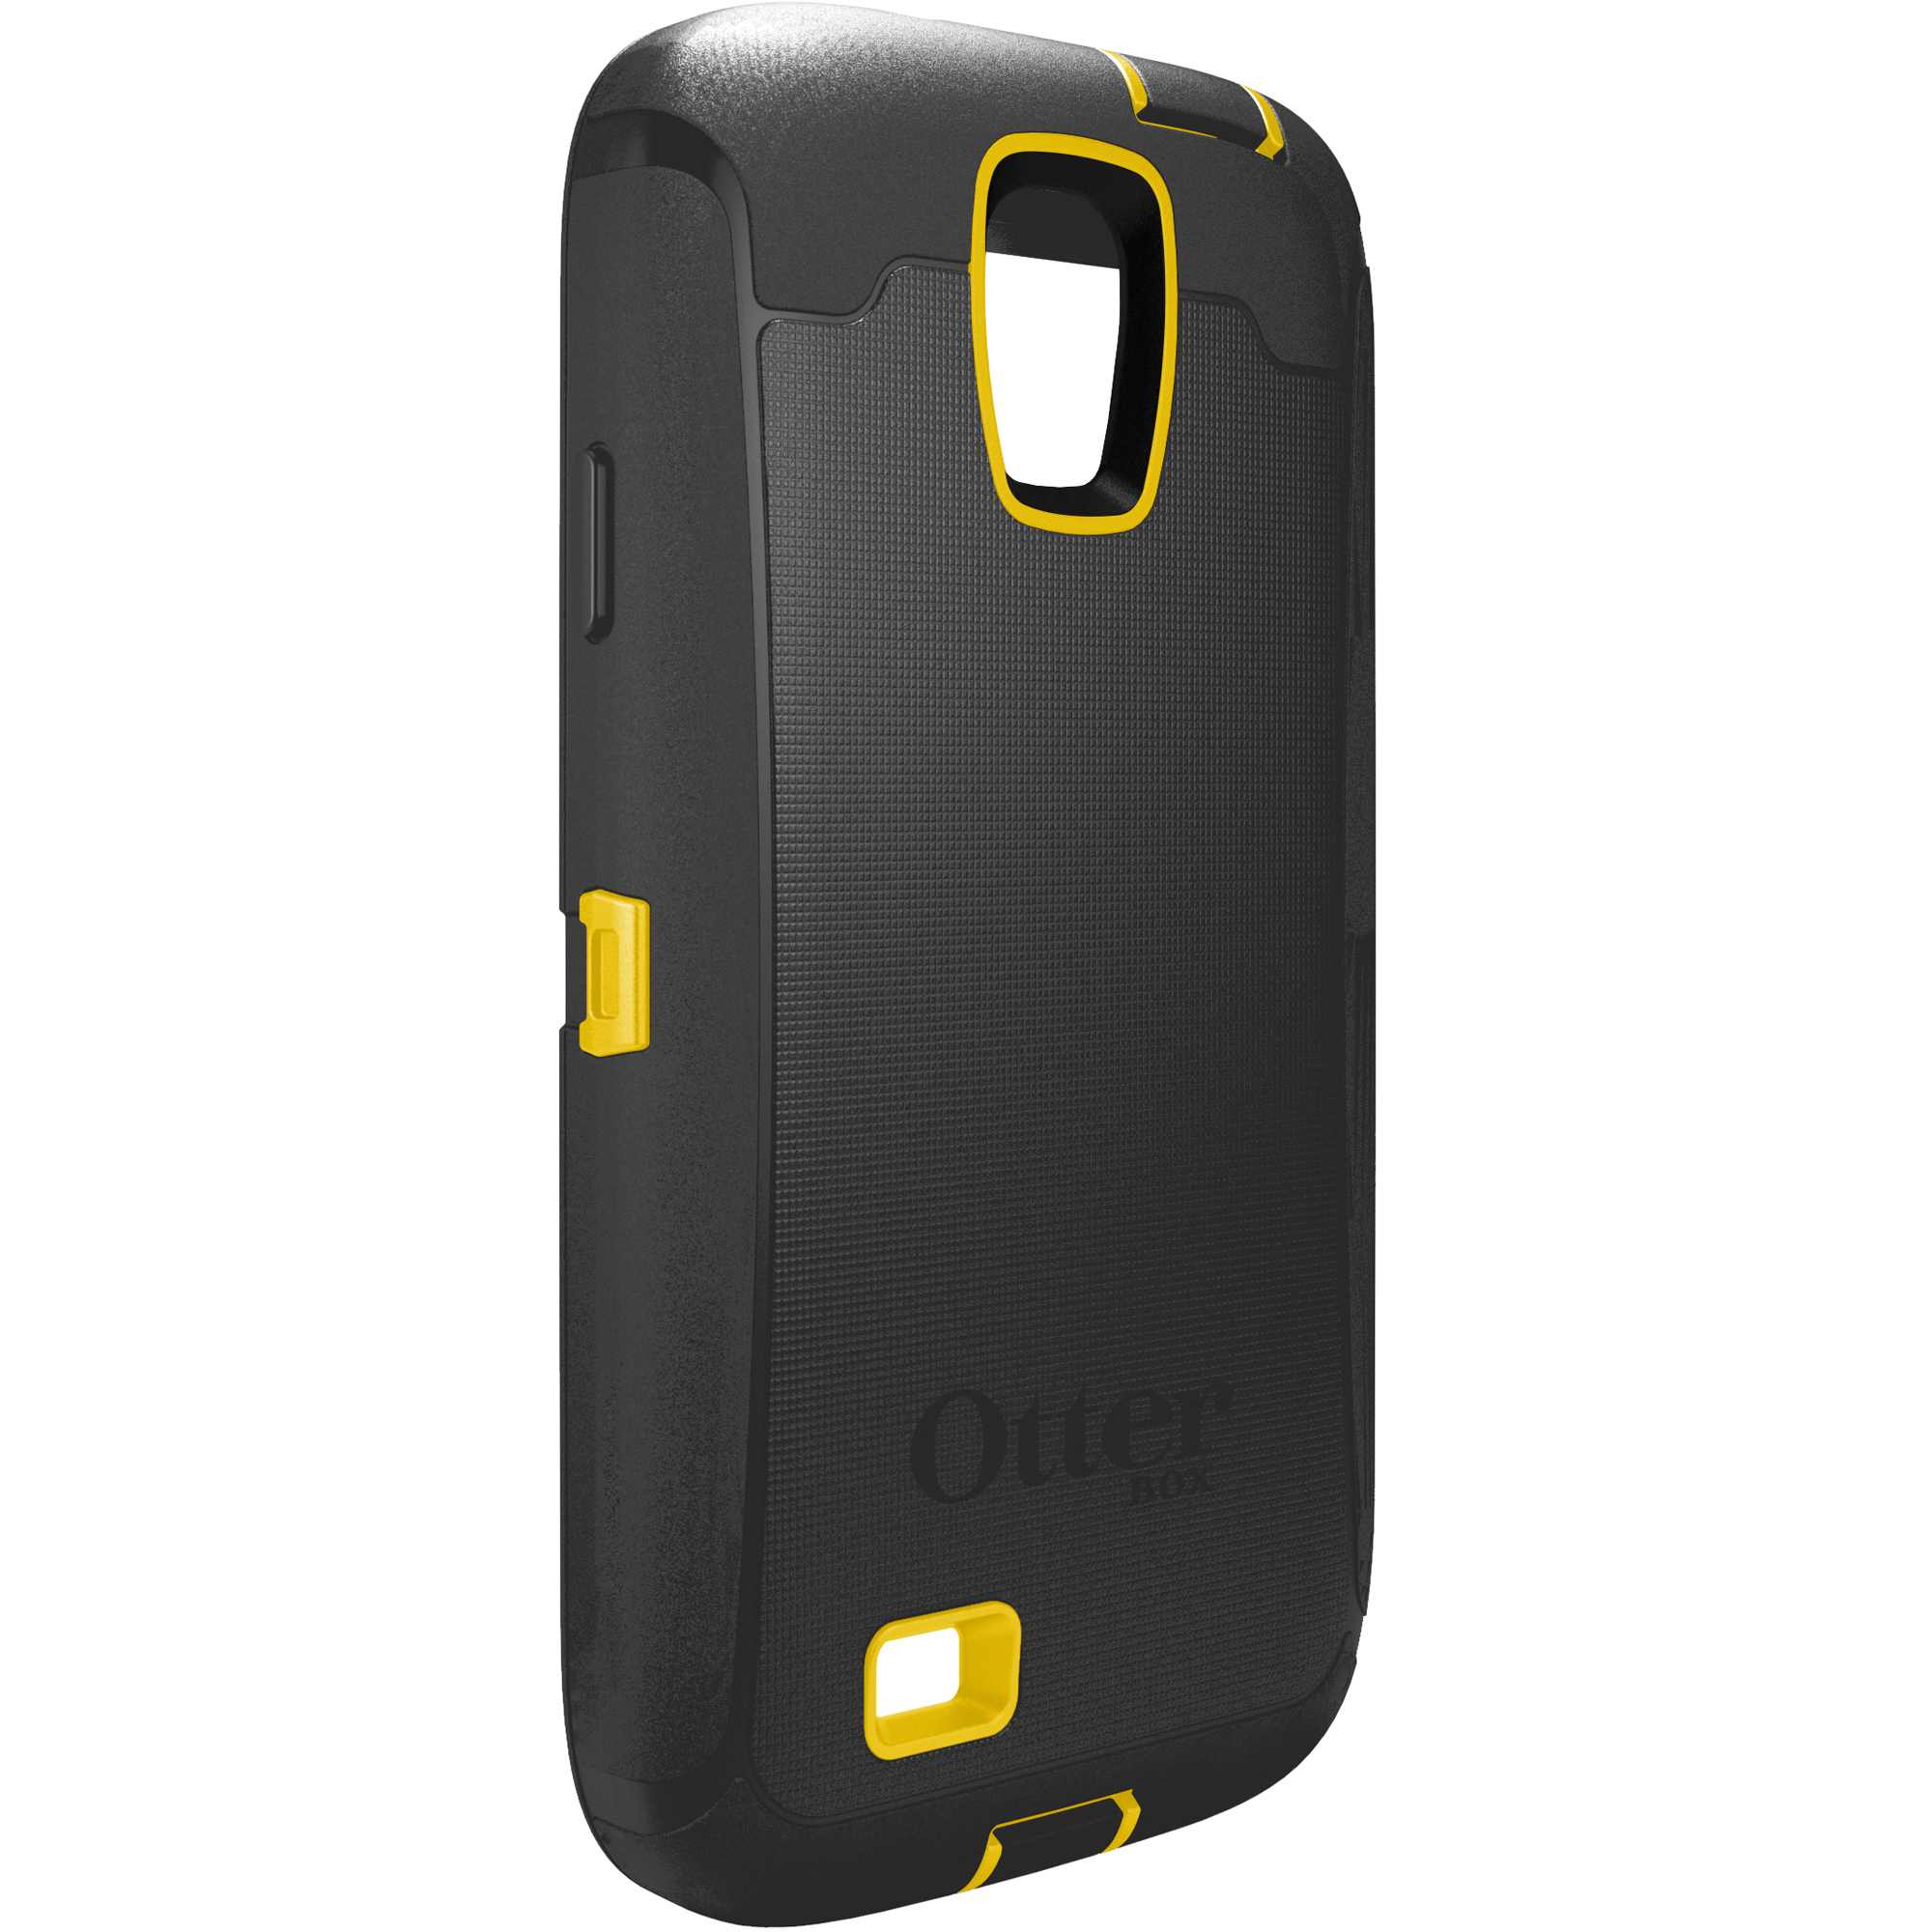 Galaxy S4 Defender Series Case - image 3 of 5